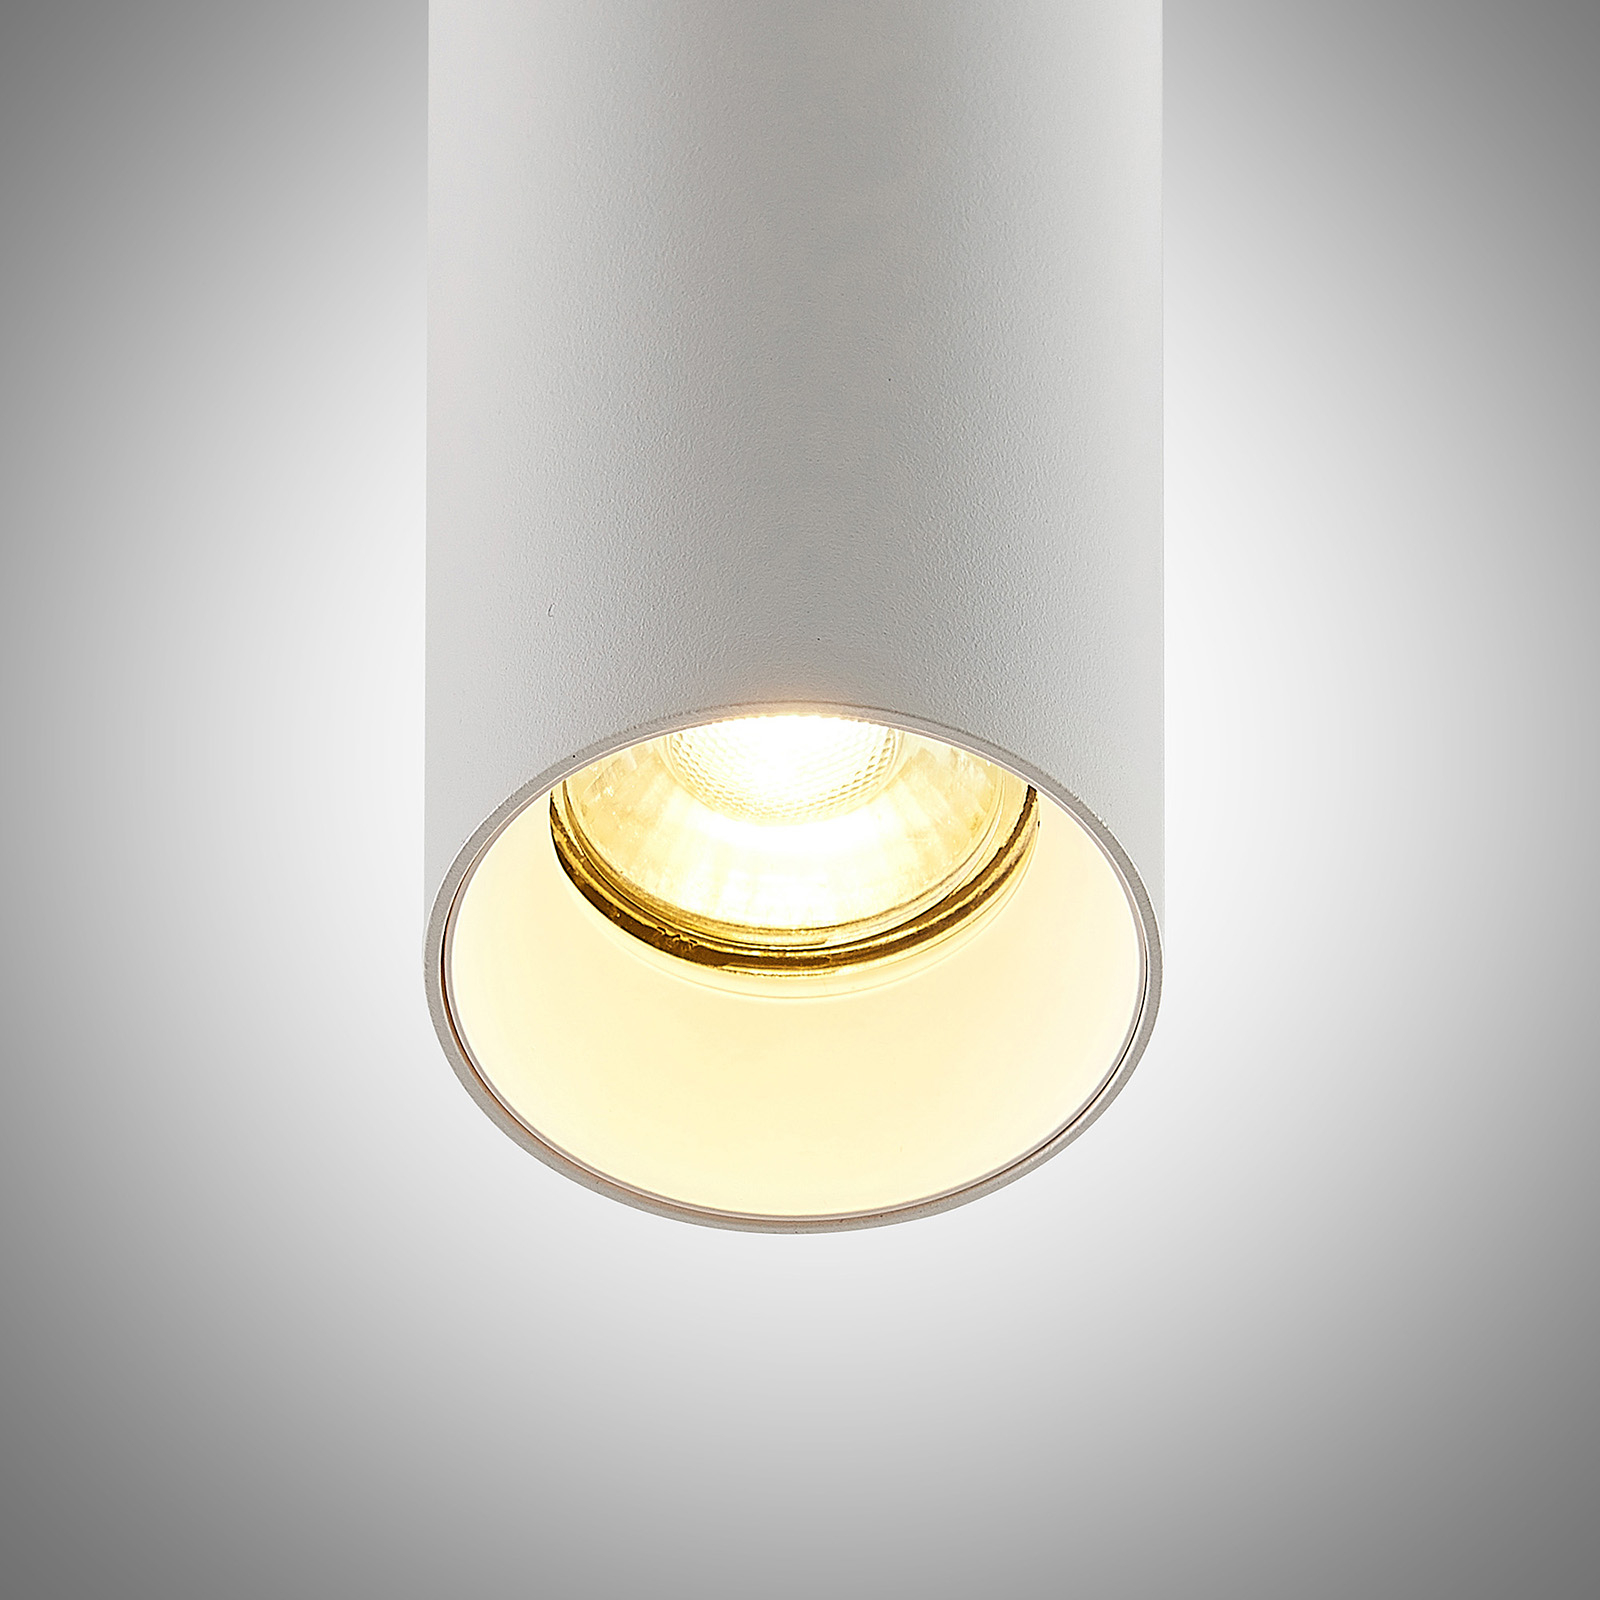 Arcchio Ejona hanglamp, hoogte 27 cm, wit